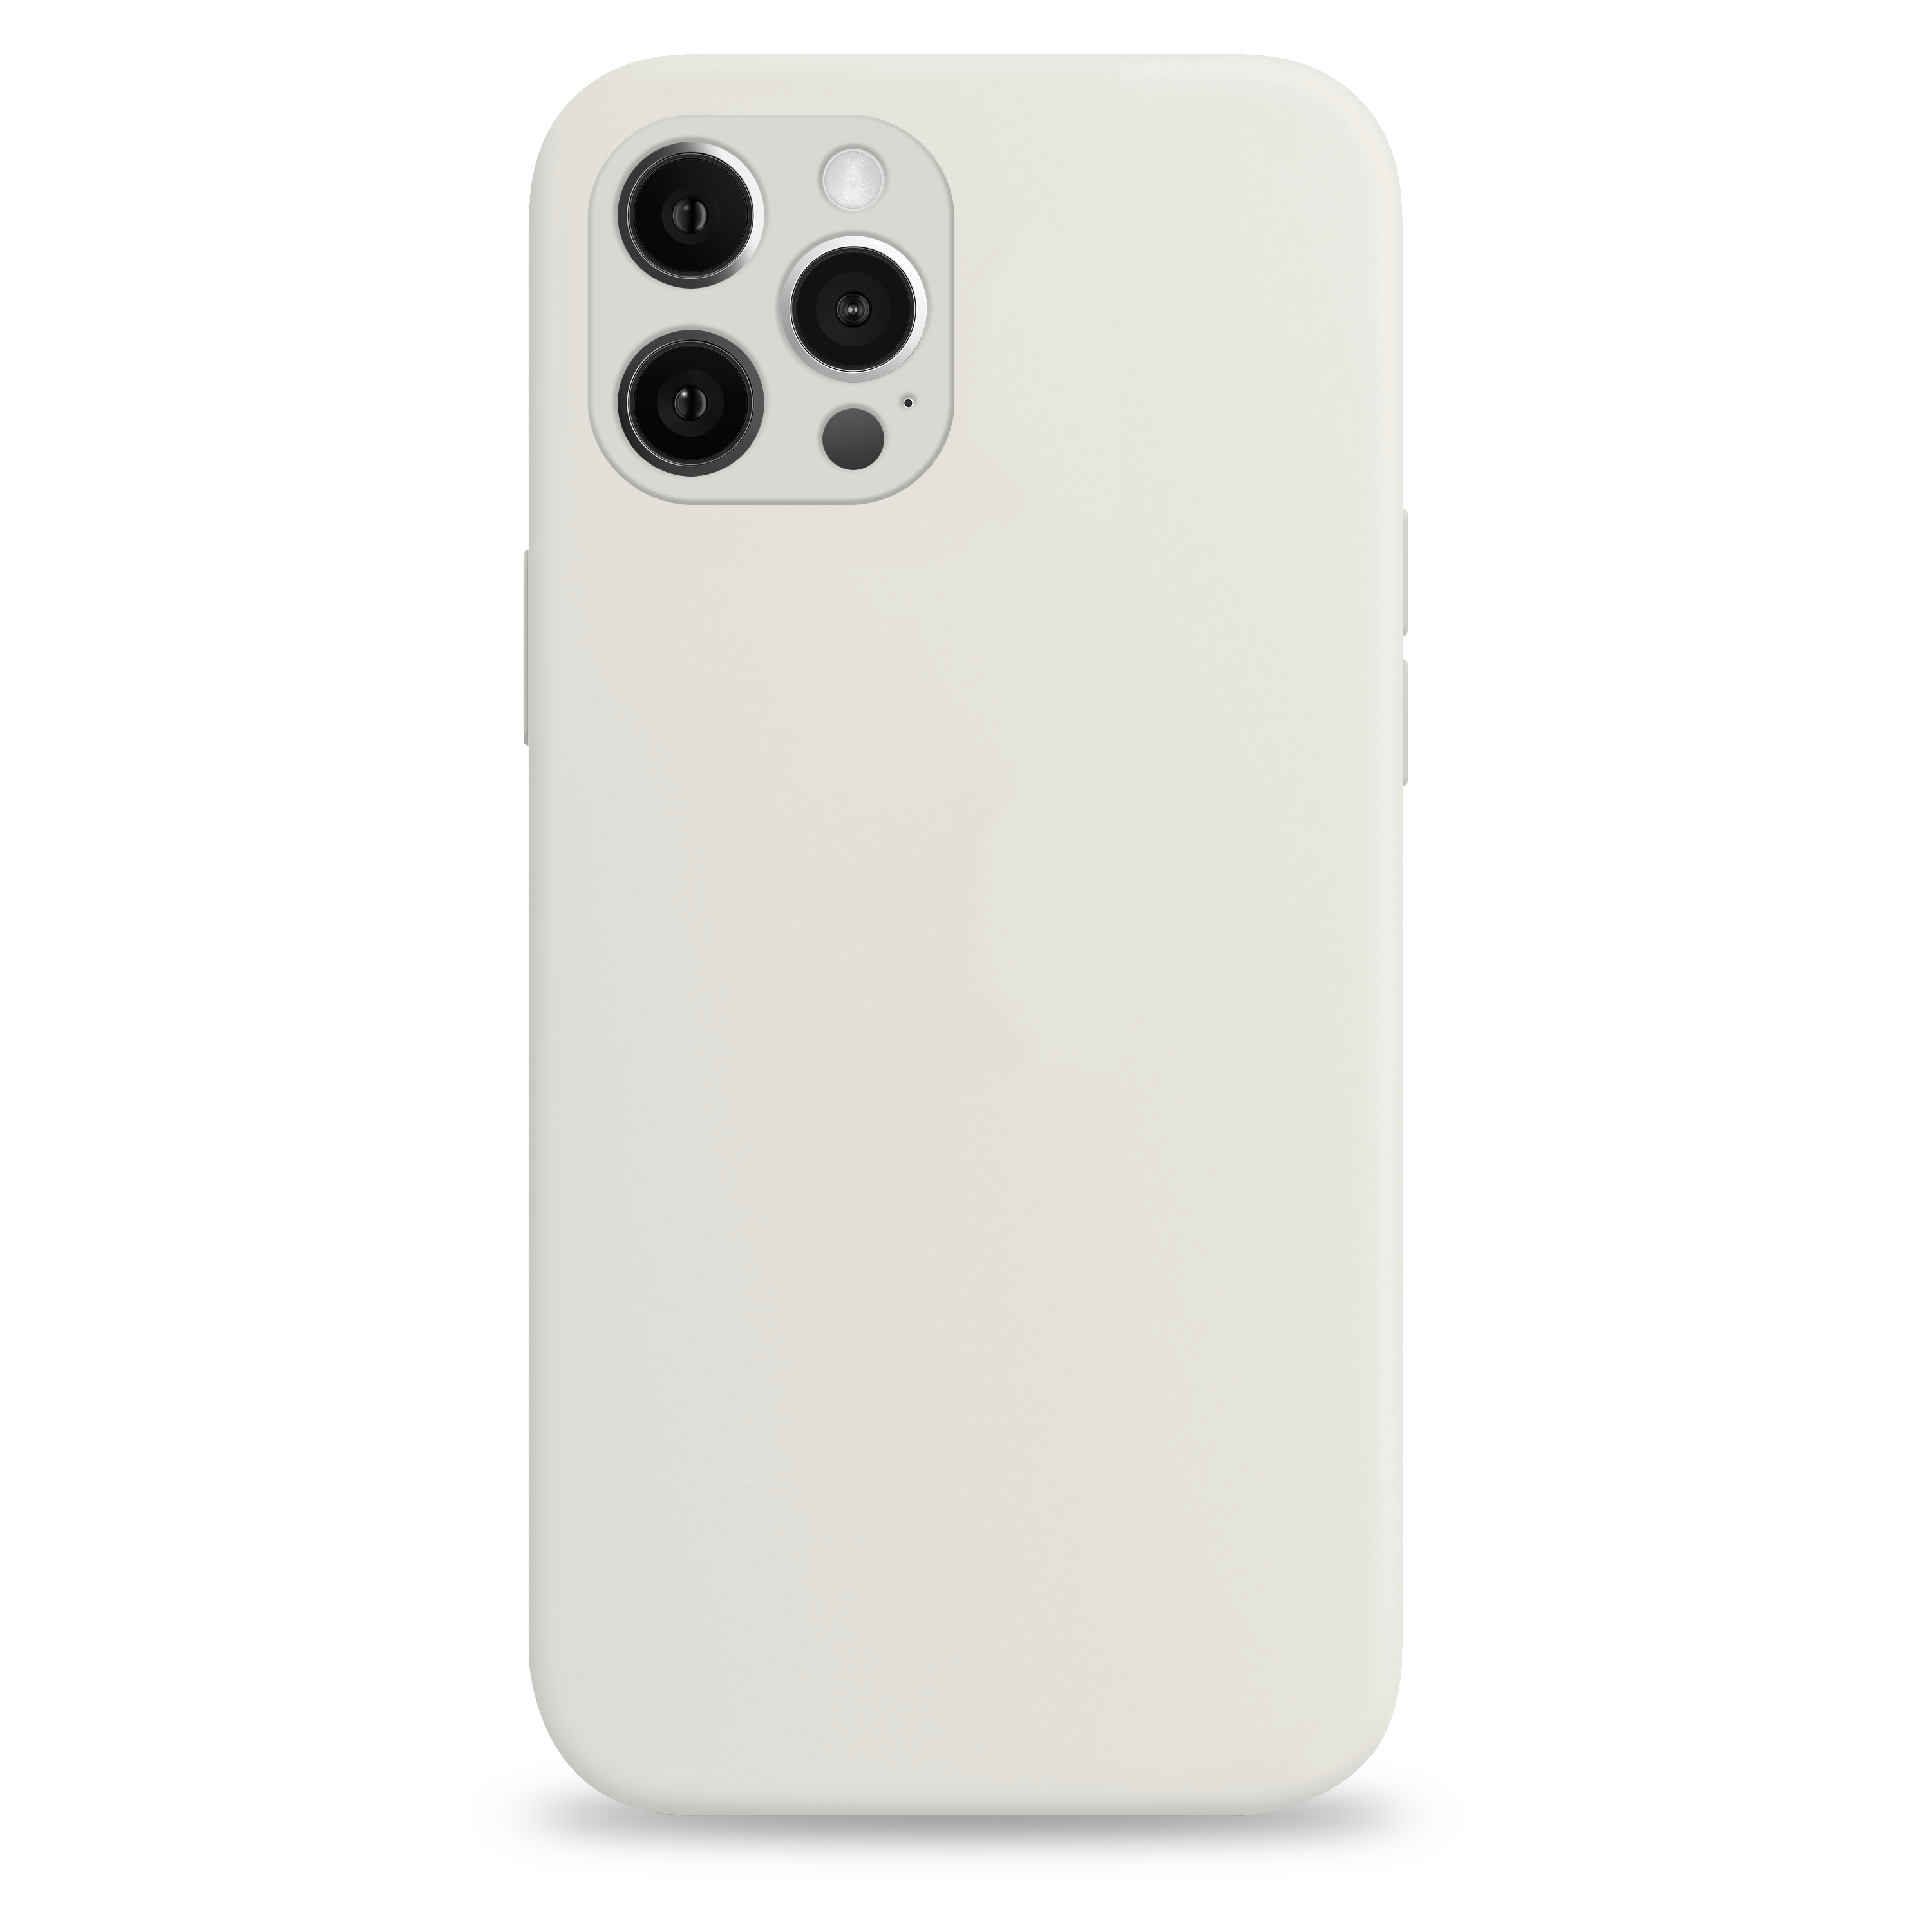 iPhone 12 Pro Max silicone case